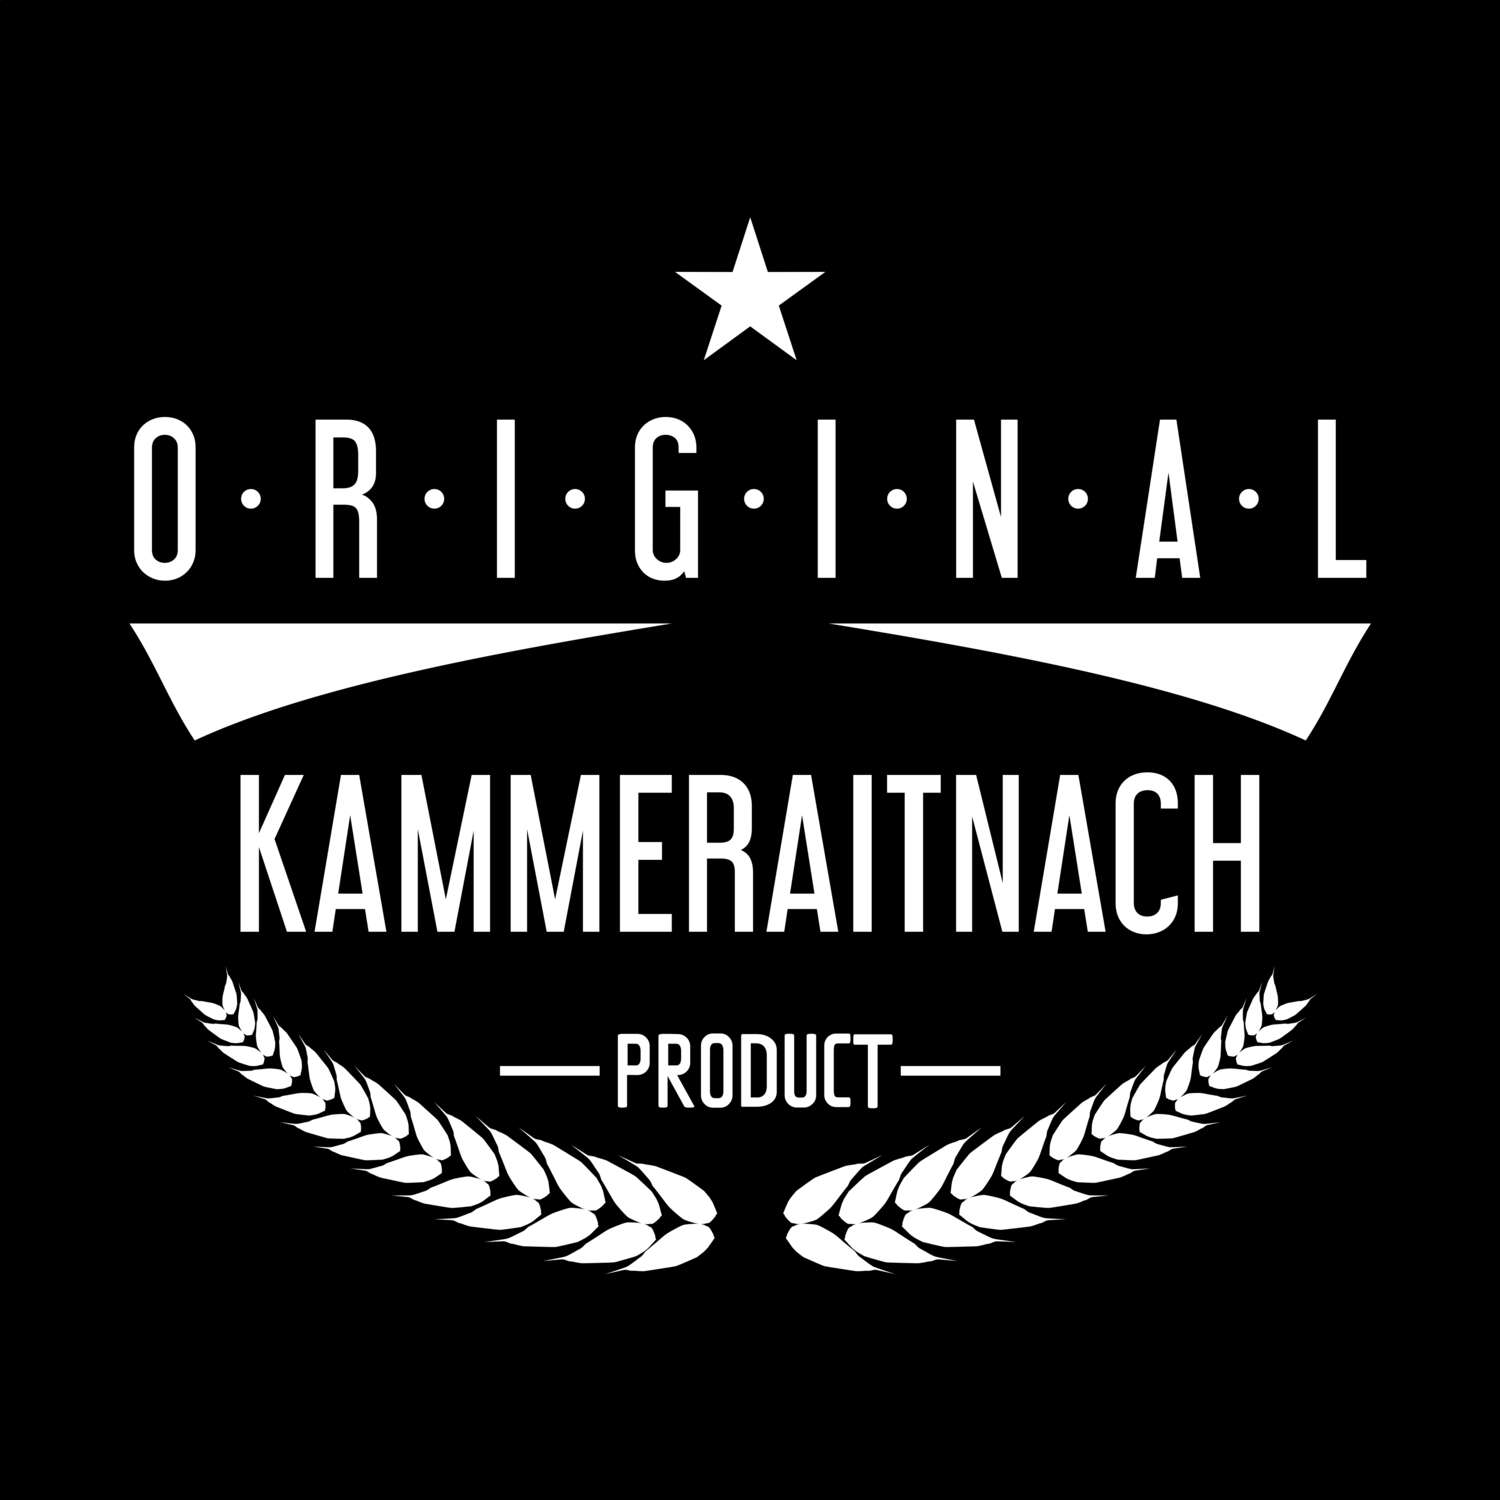 Kammeraitnach T-Shirt »Original Product«